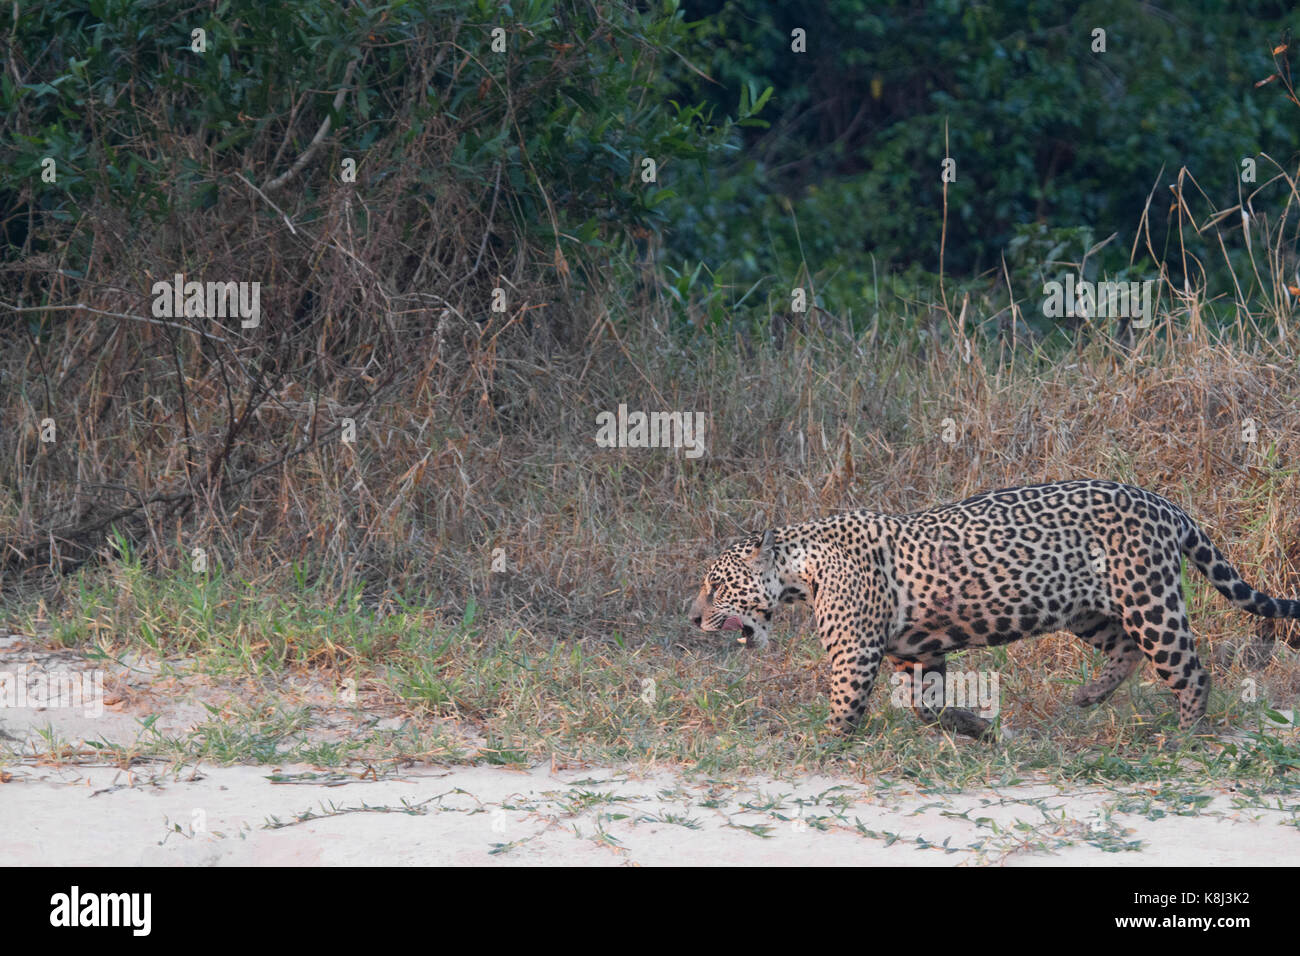 Brasilianischen Pantanal - Jaguar Stockfoto